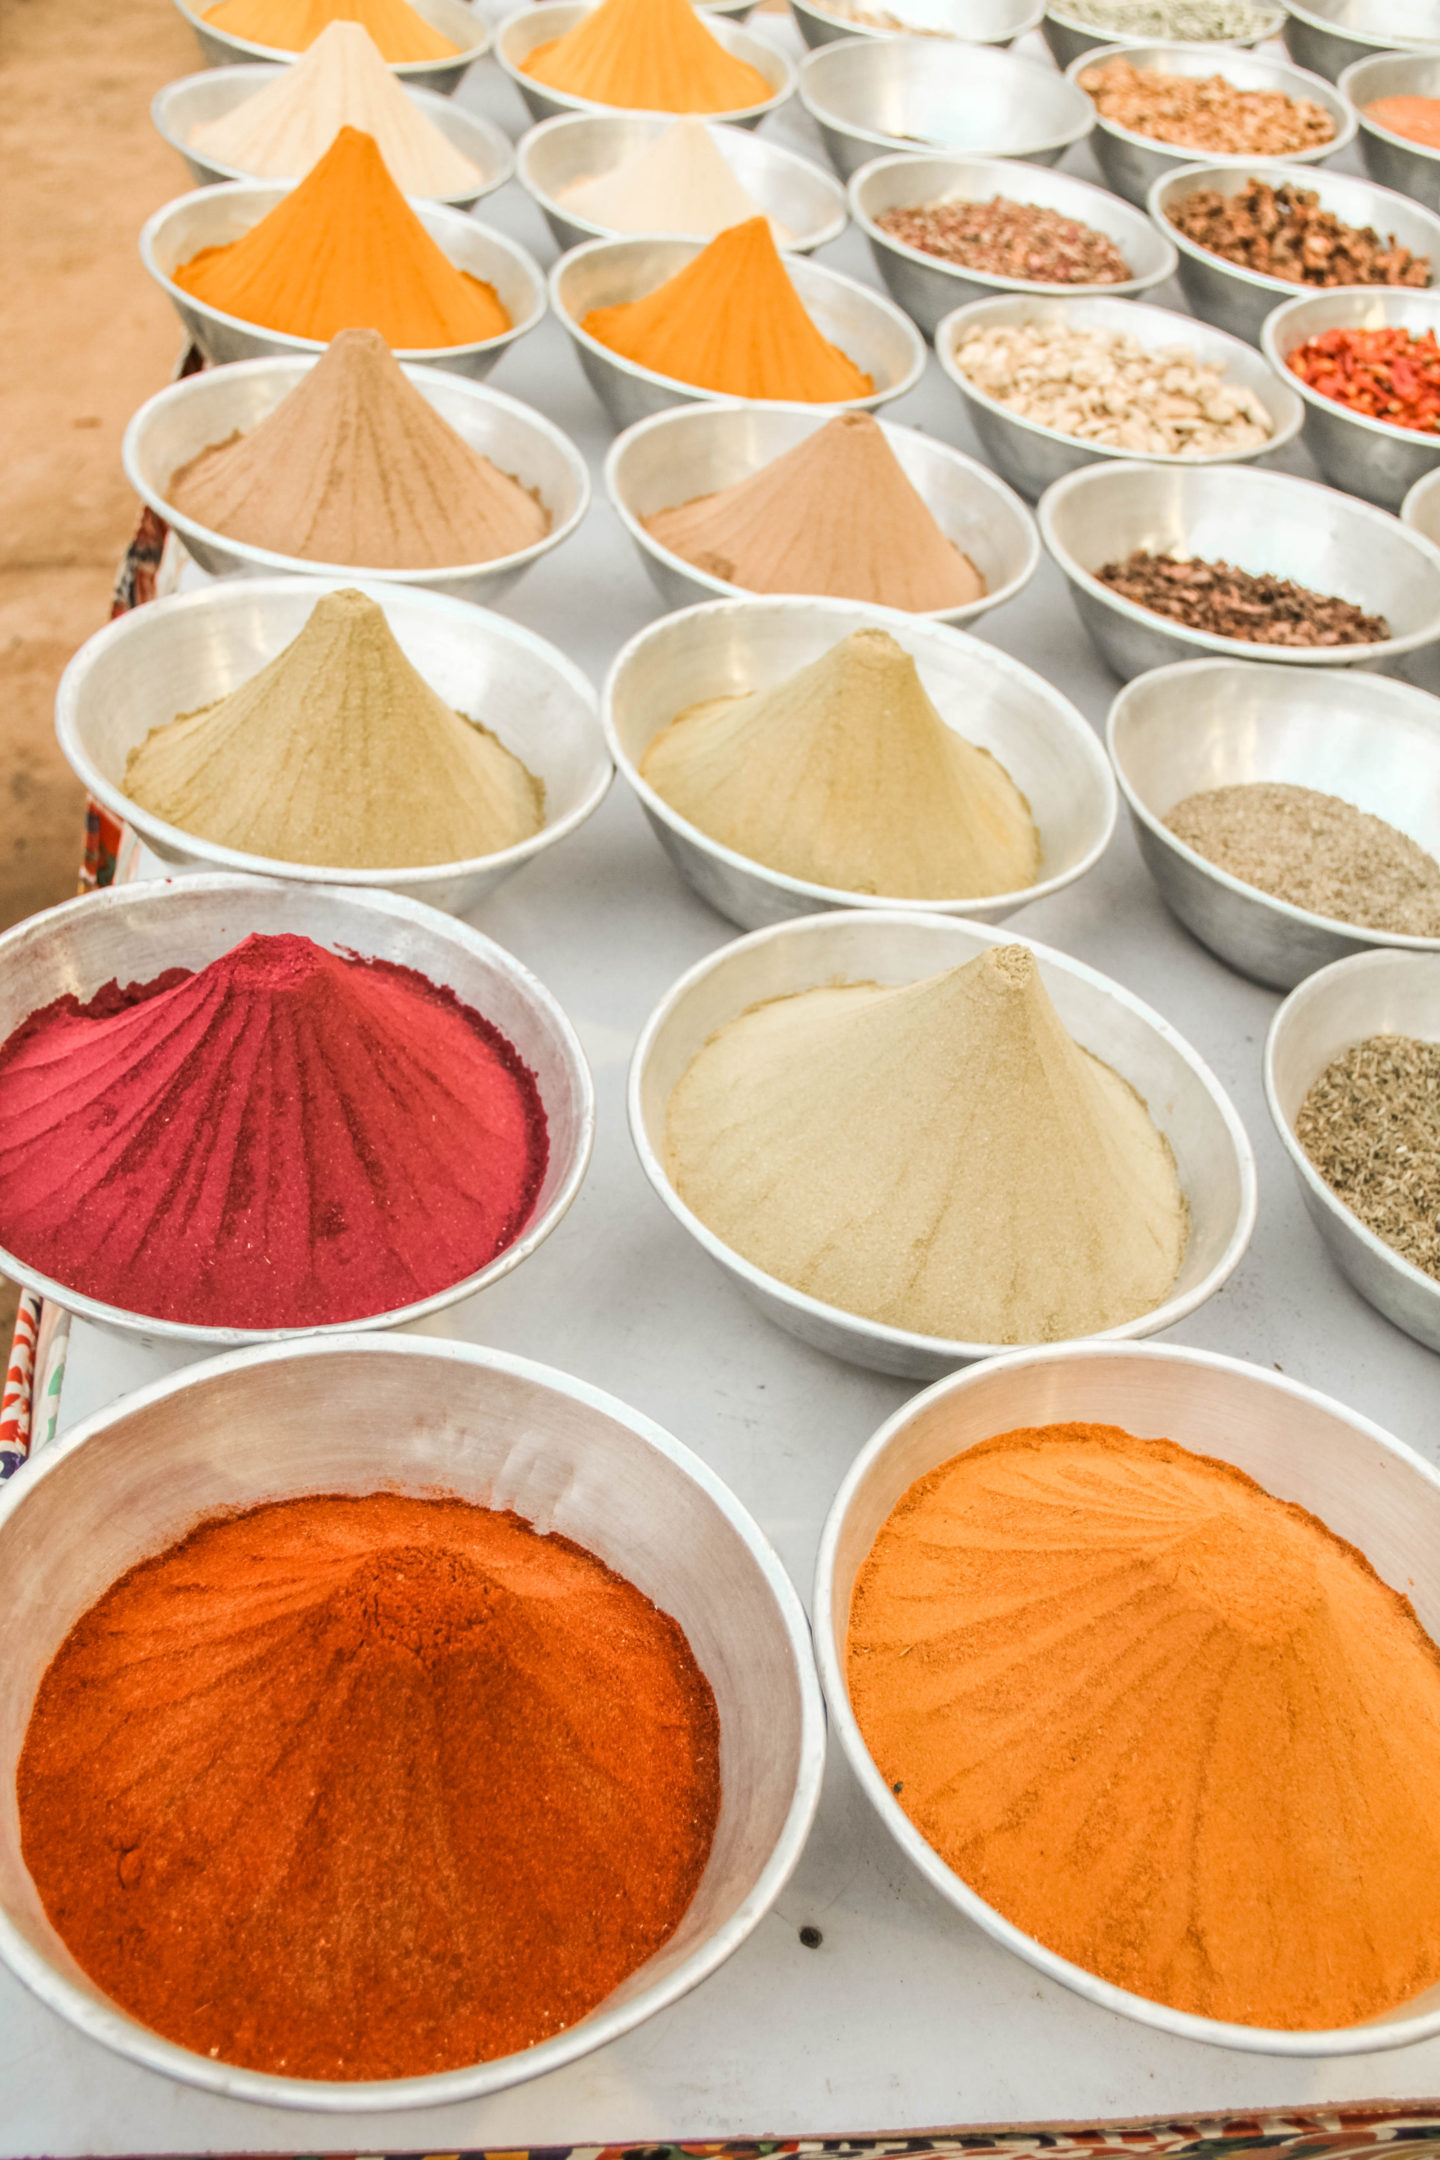 Egypt Nubian spice market